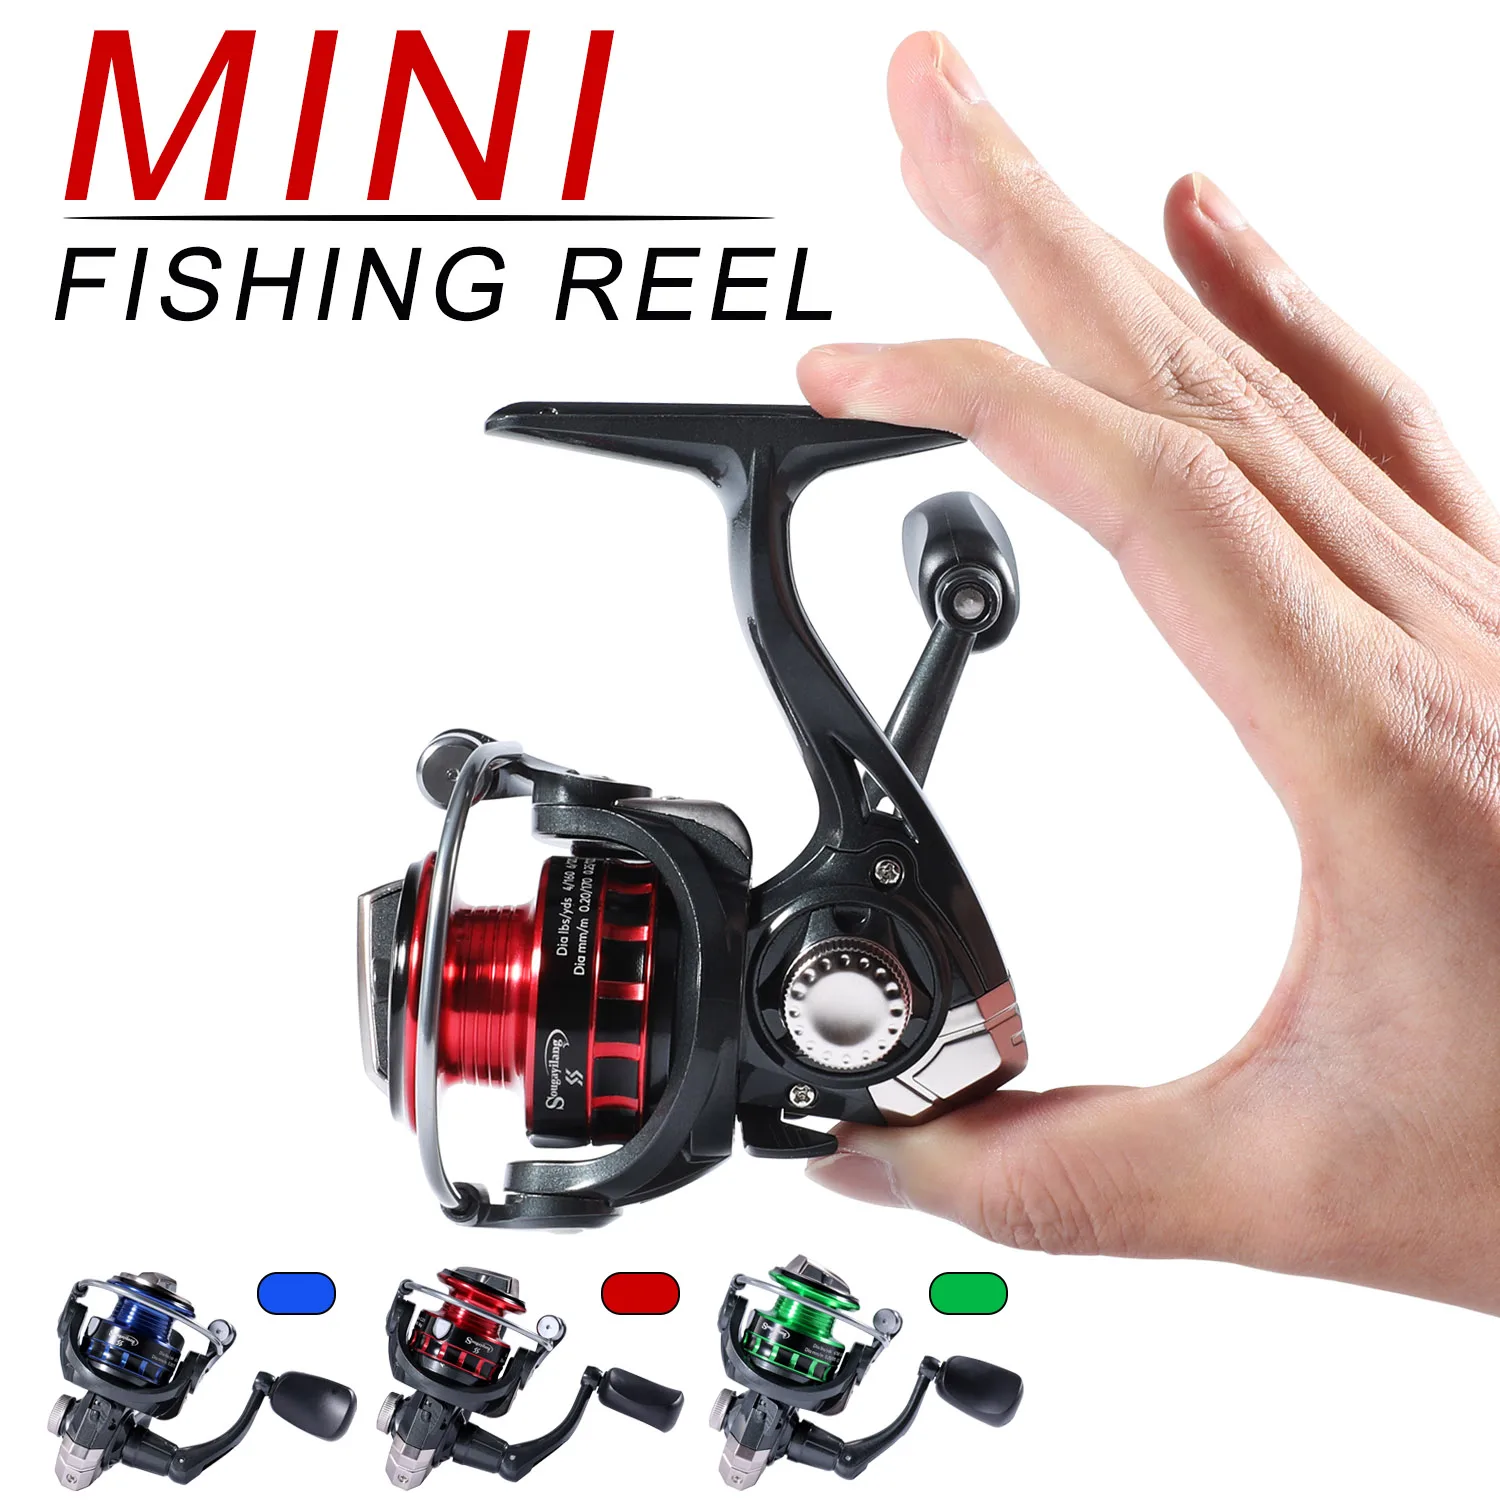 https://ae01.alicdn.com/kf/Sa5c70b8f4aeb42cb849f335adfd020991/Sougayilang-Spinning-Fishing-Reel-500-Series-5-2-1-High-Speed-Gear-Ratio-Mini-Fishing-Reel.jpg